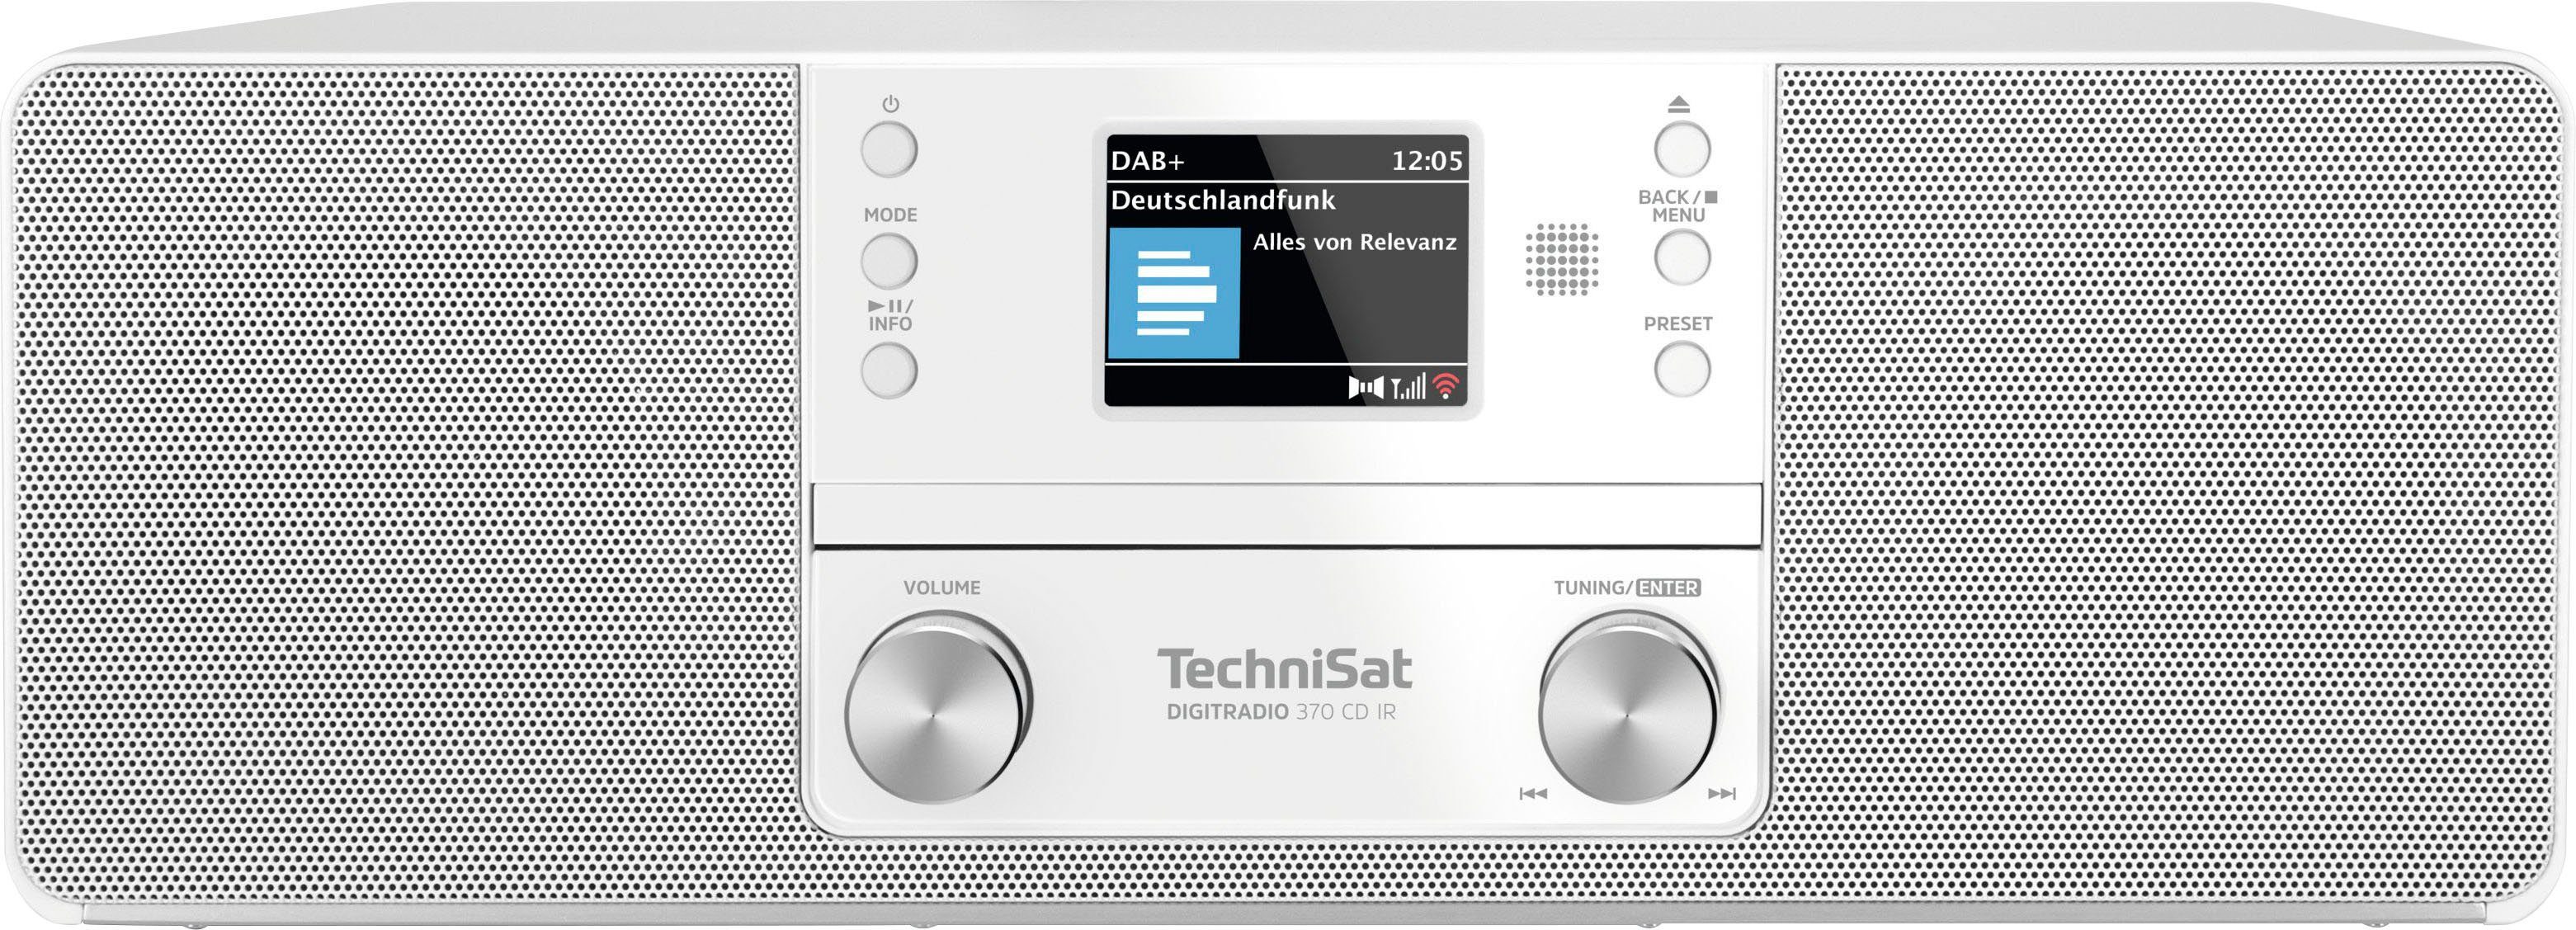 10 IR TechniSat W) UKW Digitalradio RDS, (DAB) weiß 370 (Digitalradio DIGITRADIO (DAB), mit CD